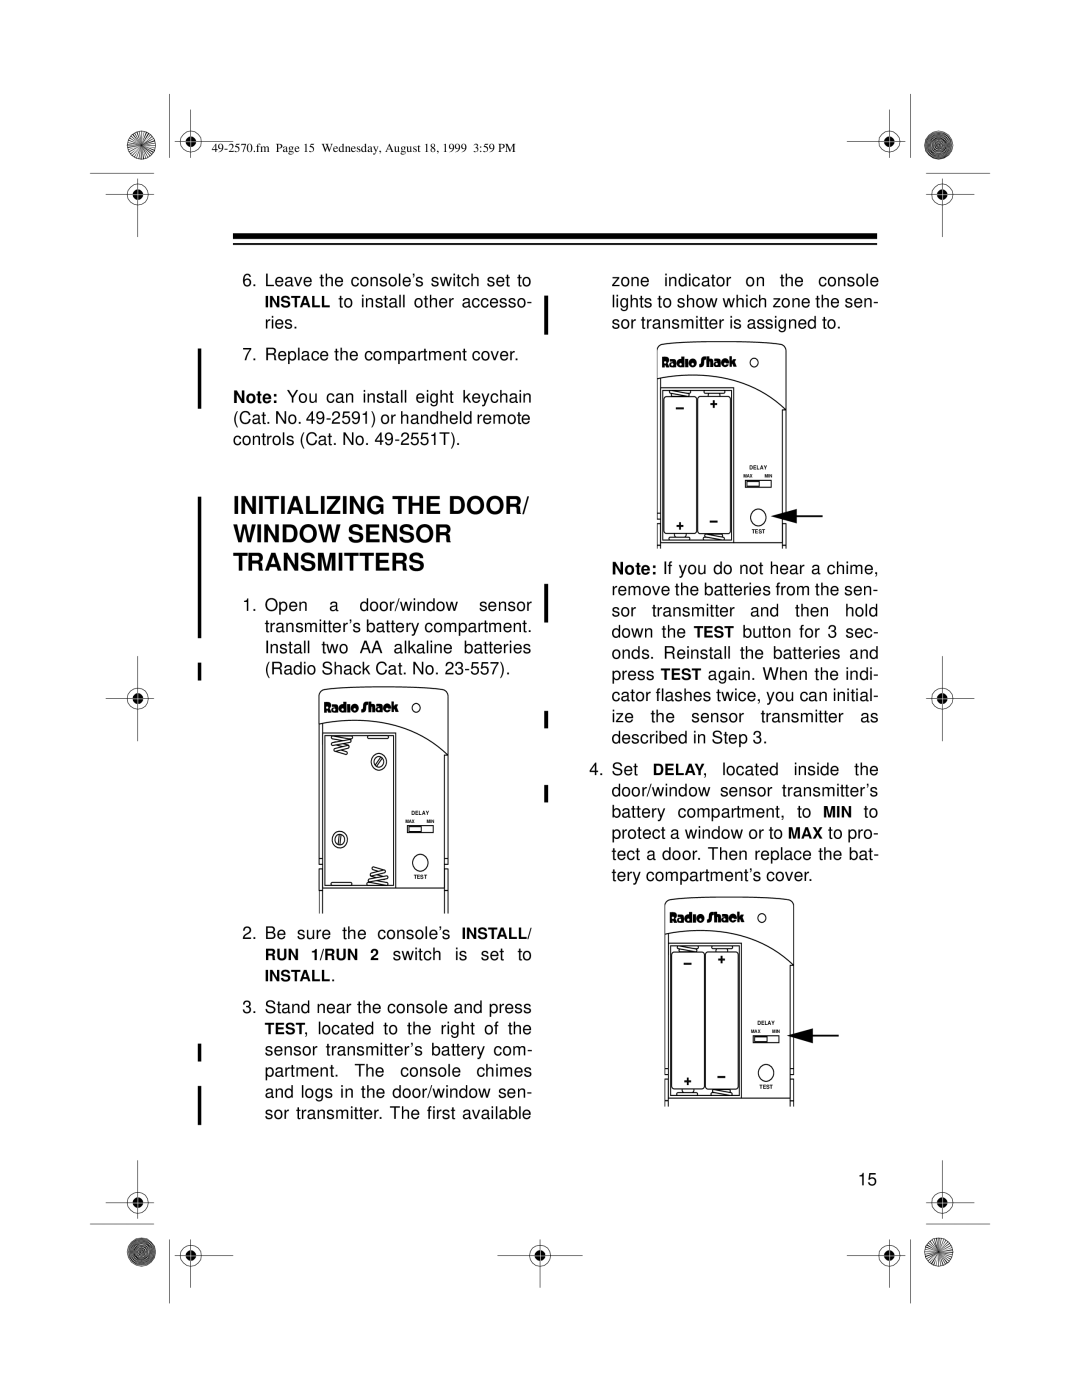 Radio Shack 49-2570 owner manual Initializing The Door/ Window Sensor Transmitters 